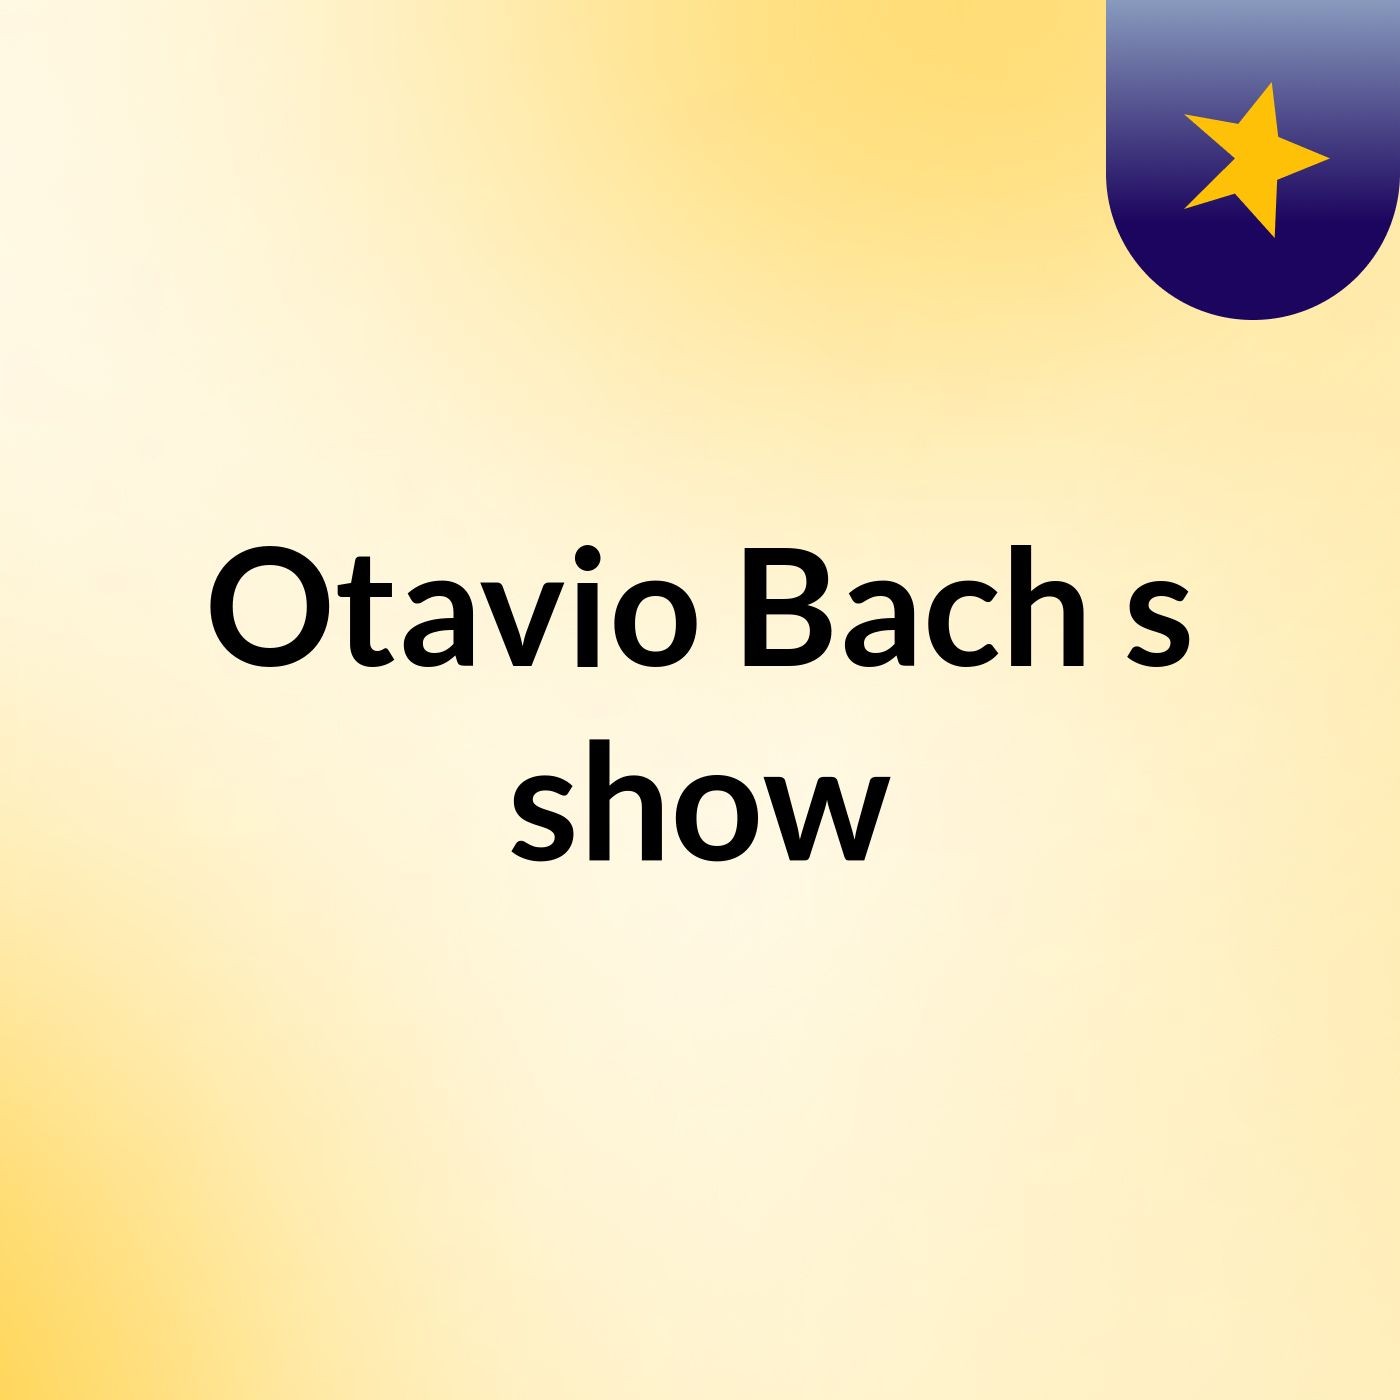 Otavio Bach's show